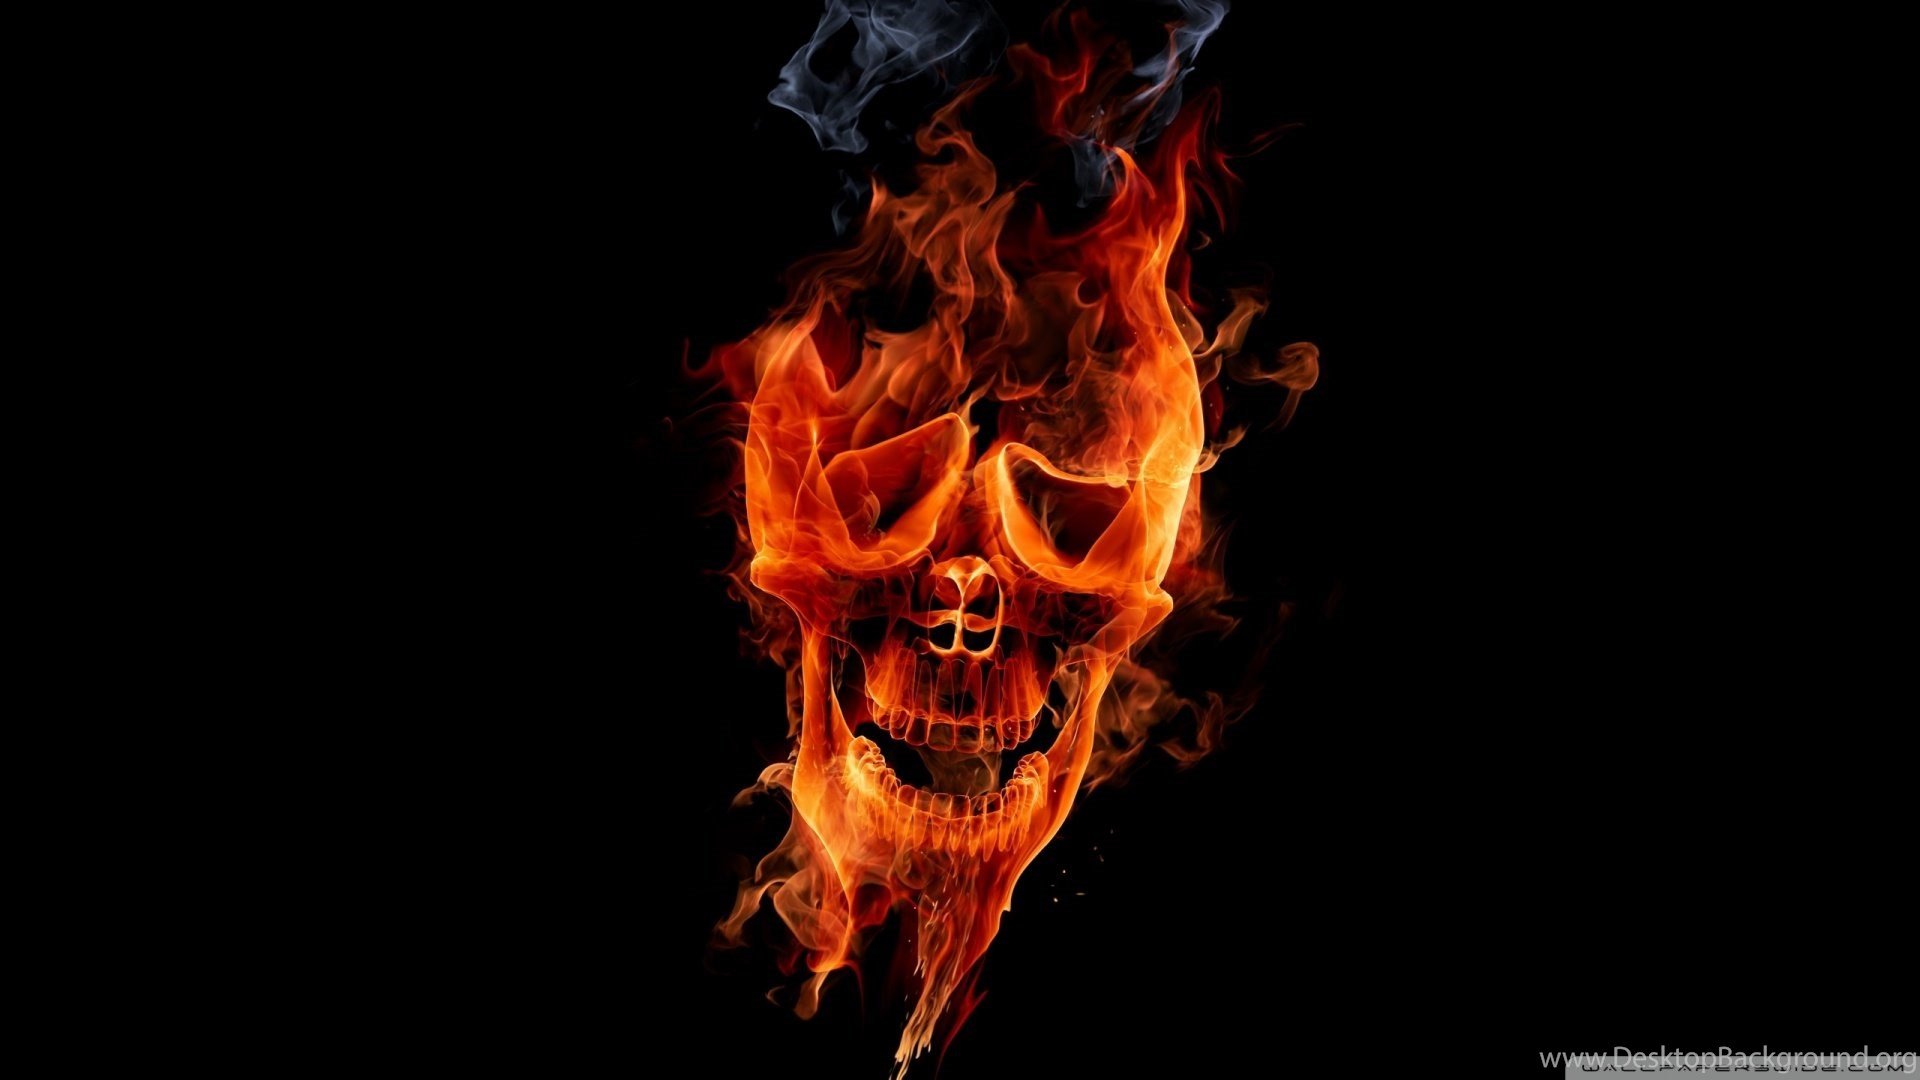 High Resolution Fire Flaming Skull Wallpaper Full Size. Desktop Background